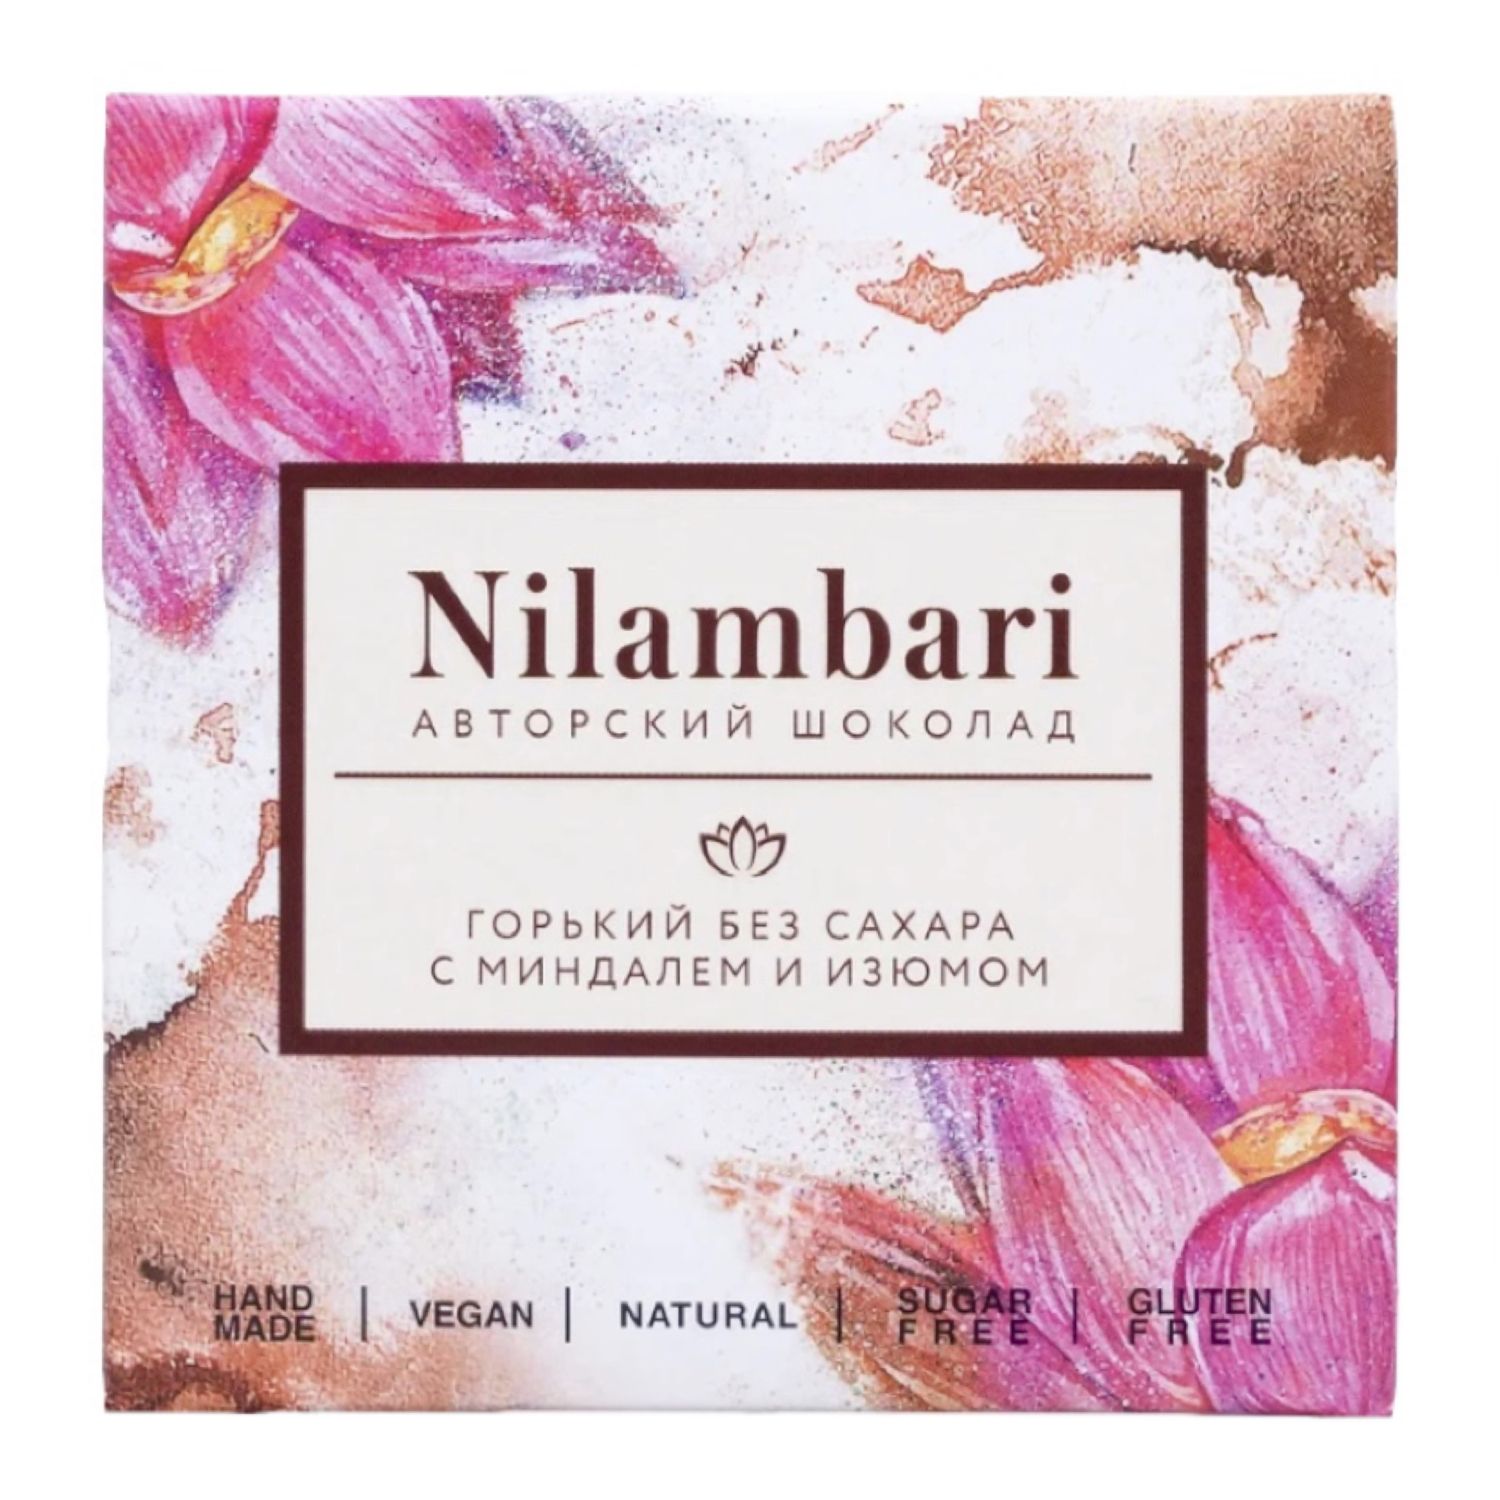 Шоколад Nilambari горький с миндалем и изюмом, без сахара